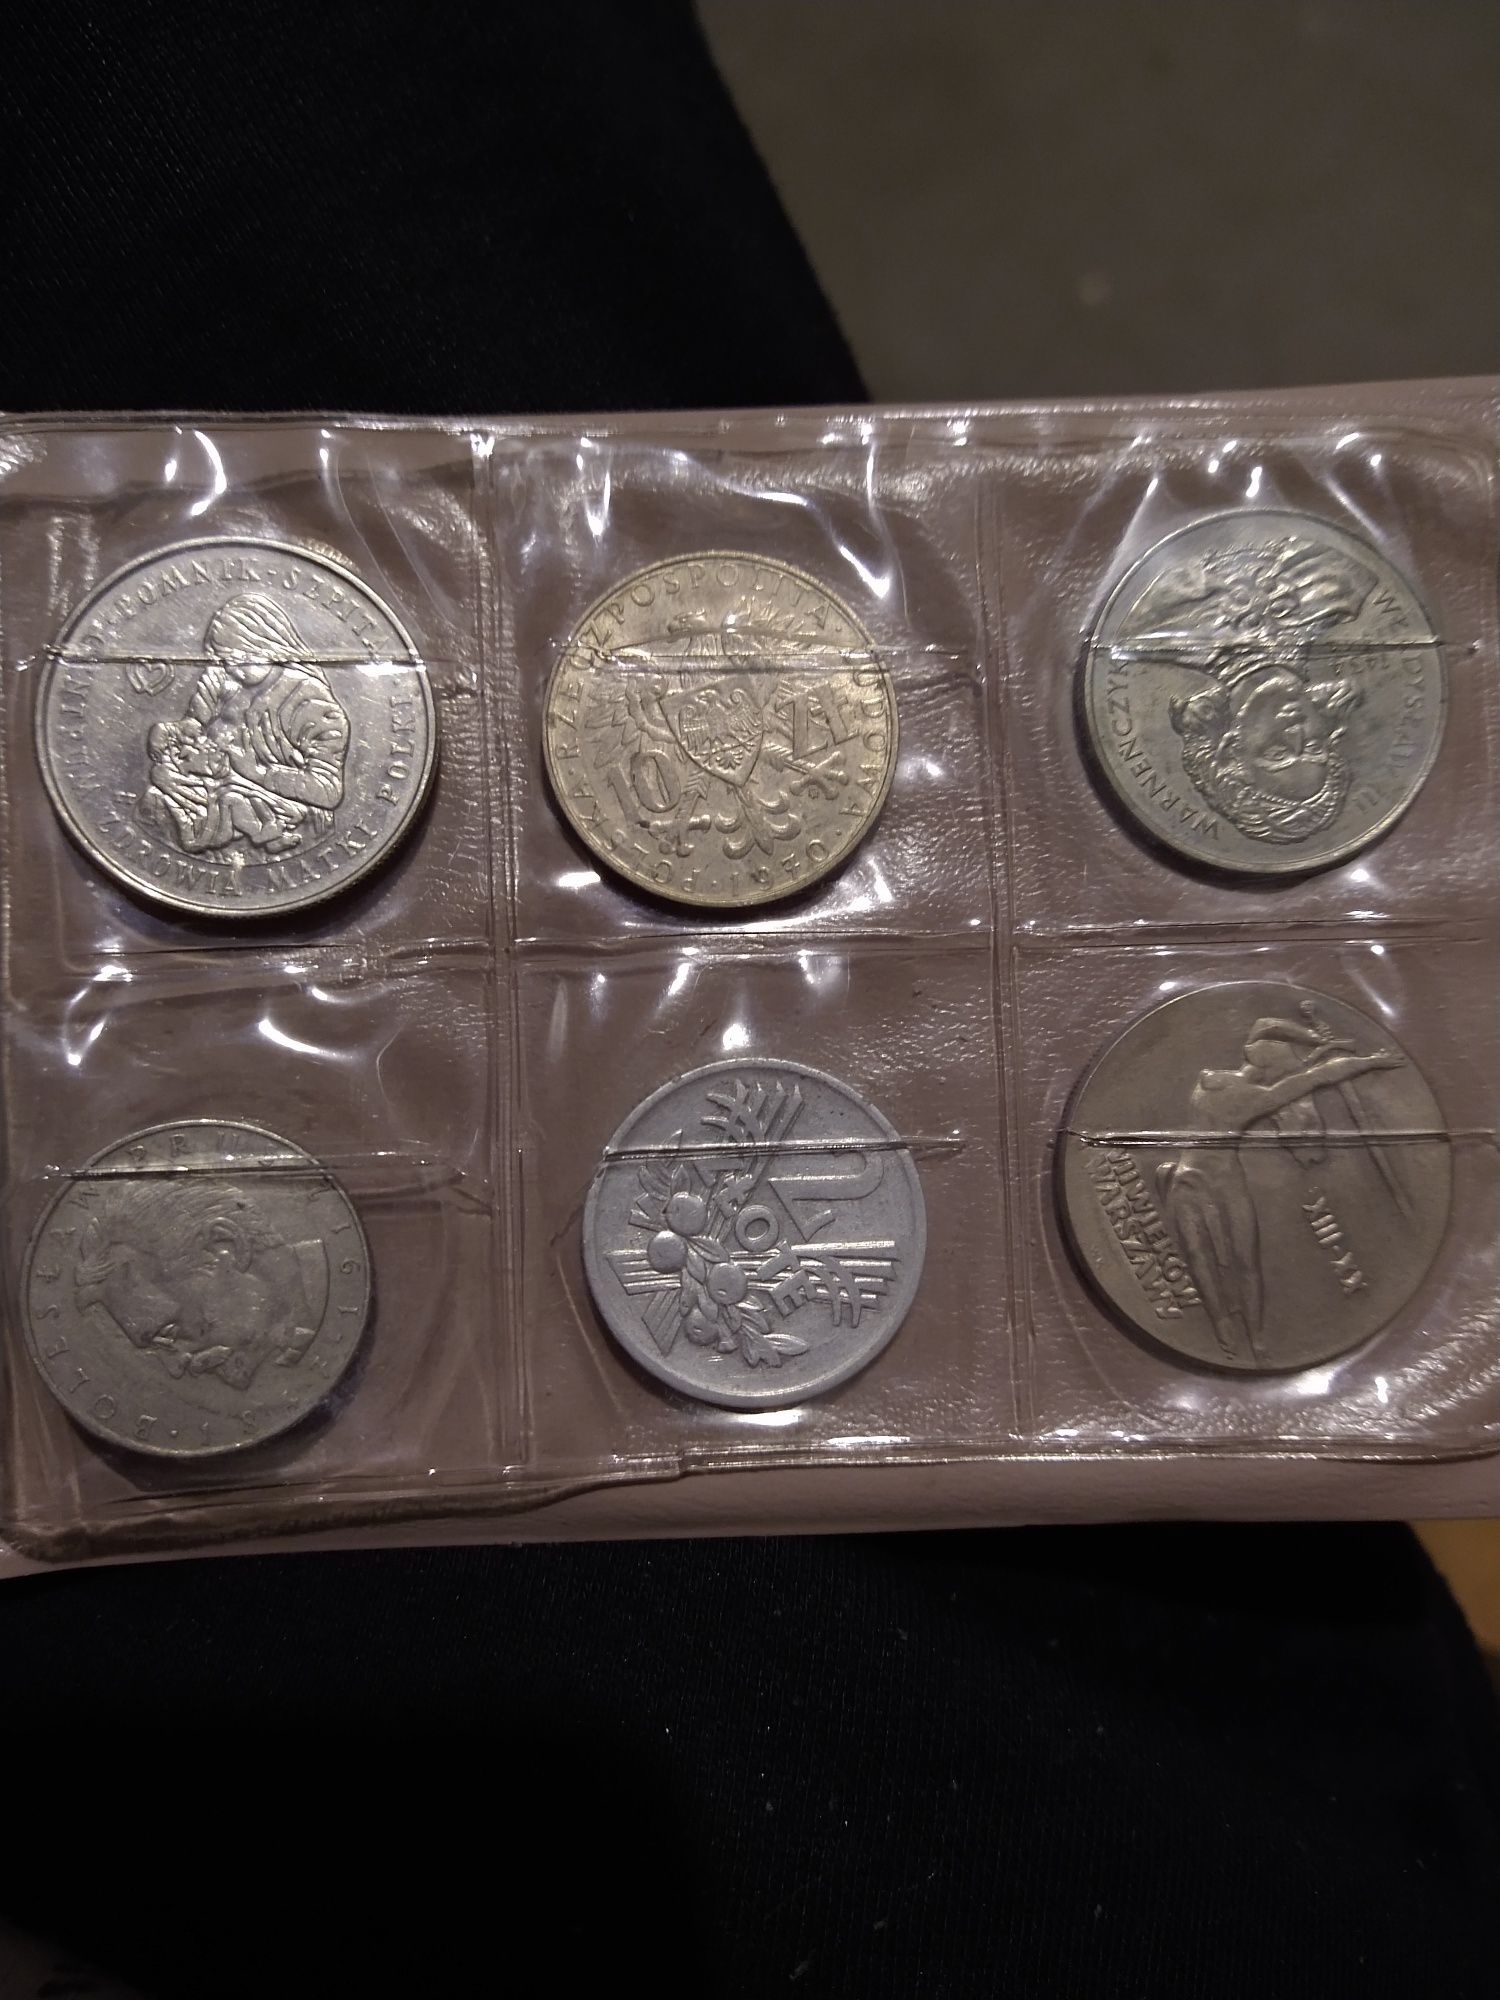 Stare polskie monety